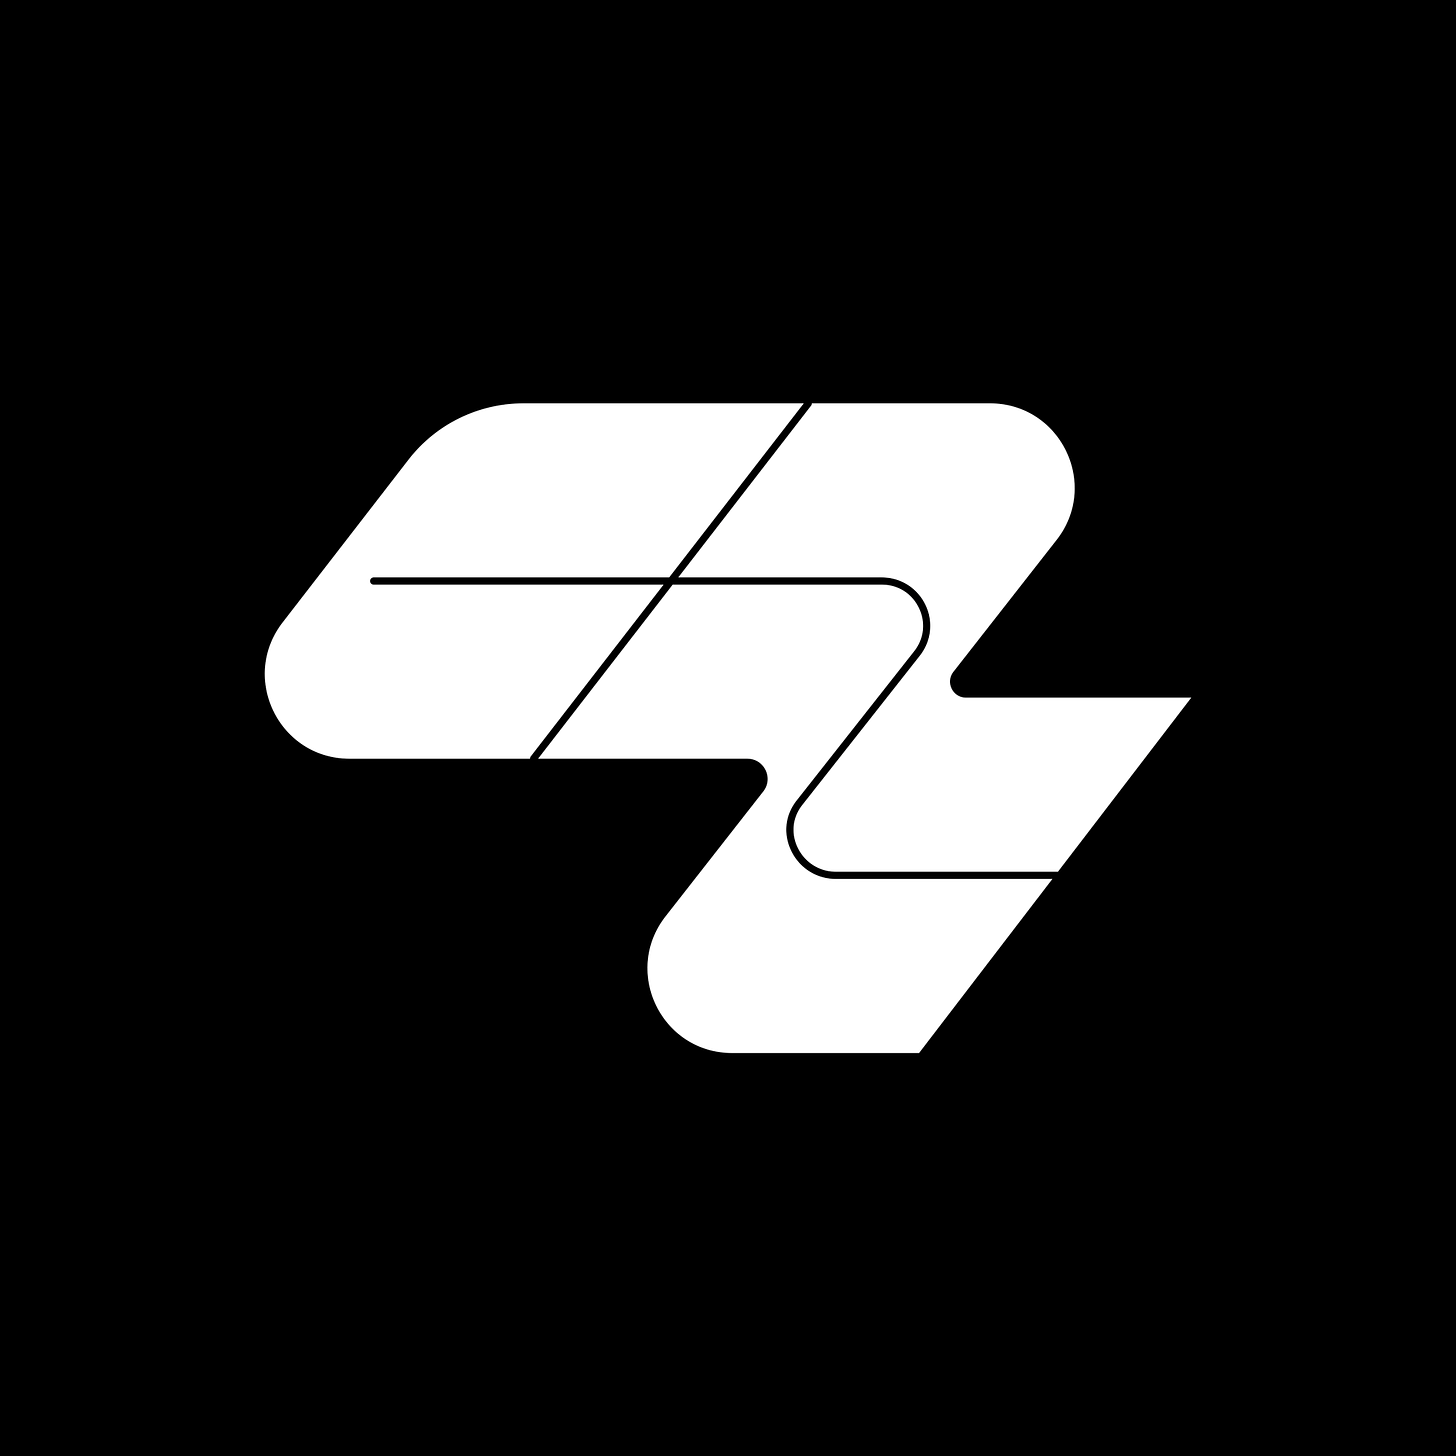 Logo by Gary Hinsche for Crown Zellerbach. A paper roll inspired ‘CZ’ monogram